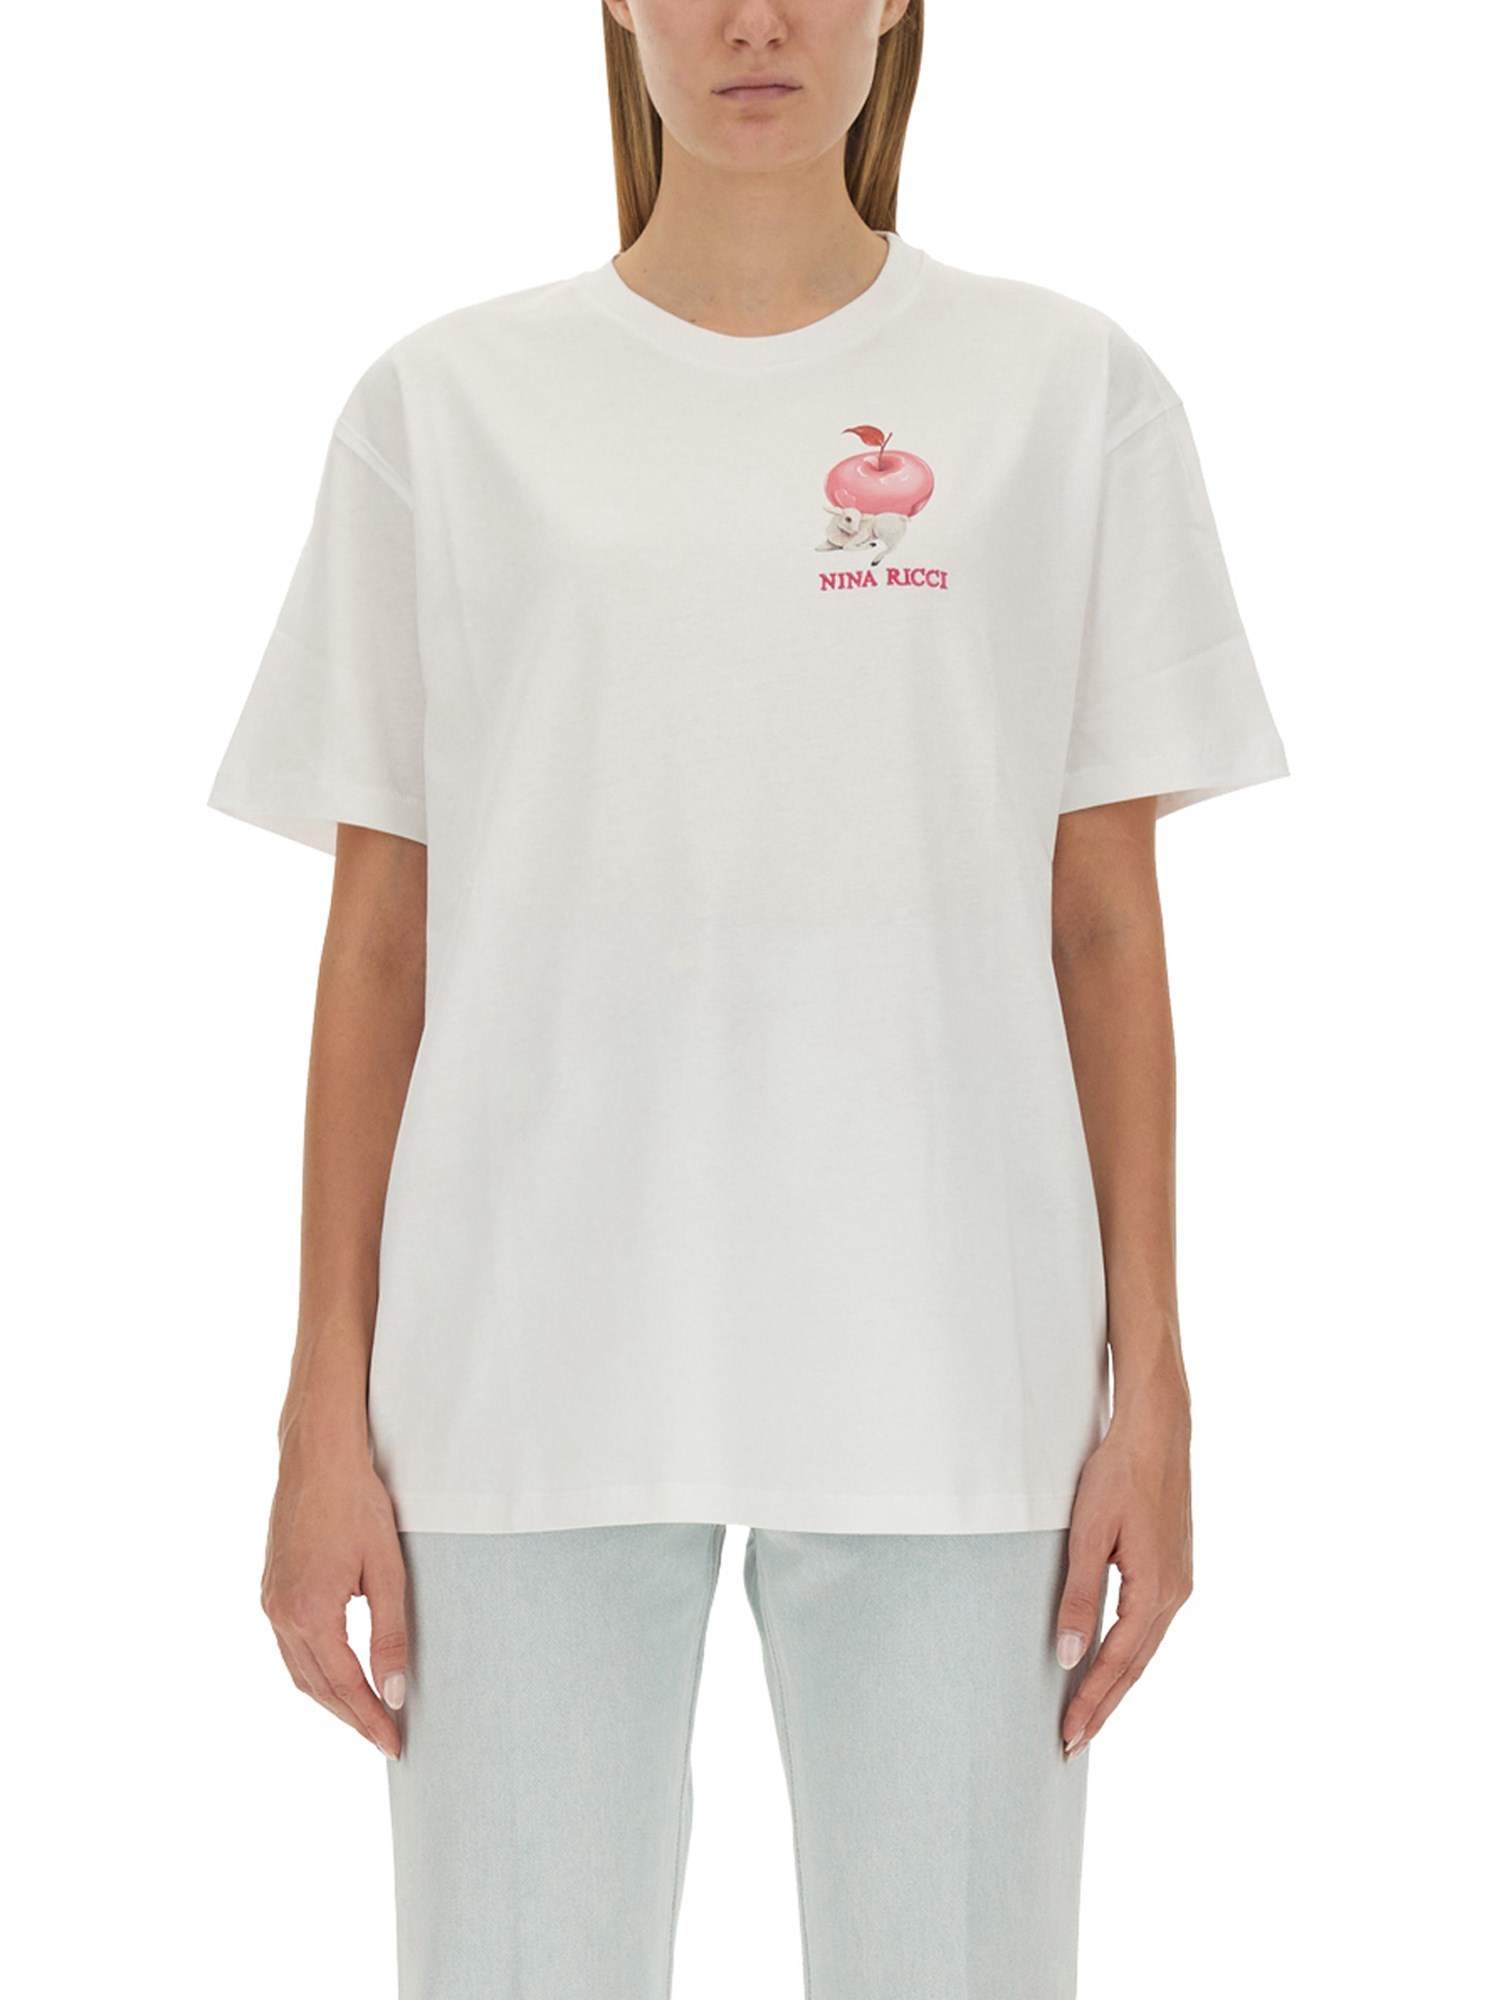 Nina Ricci Innocent Apple T-shirt In White